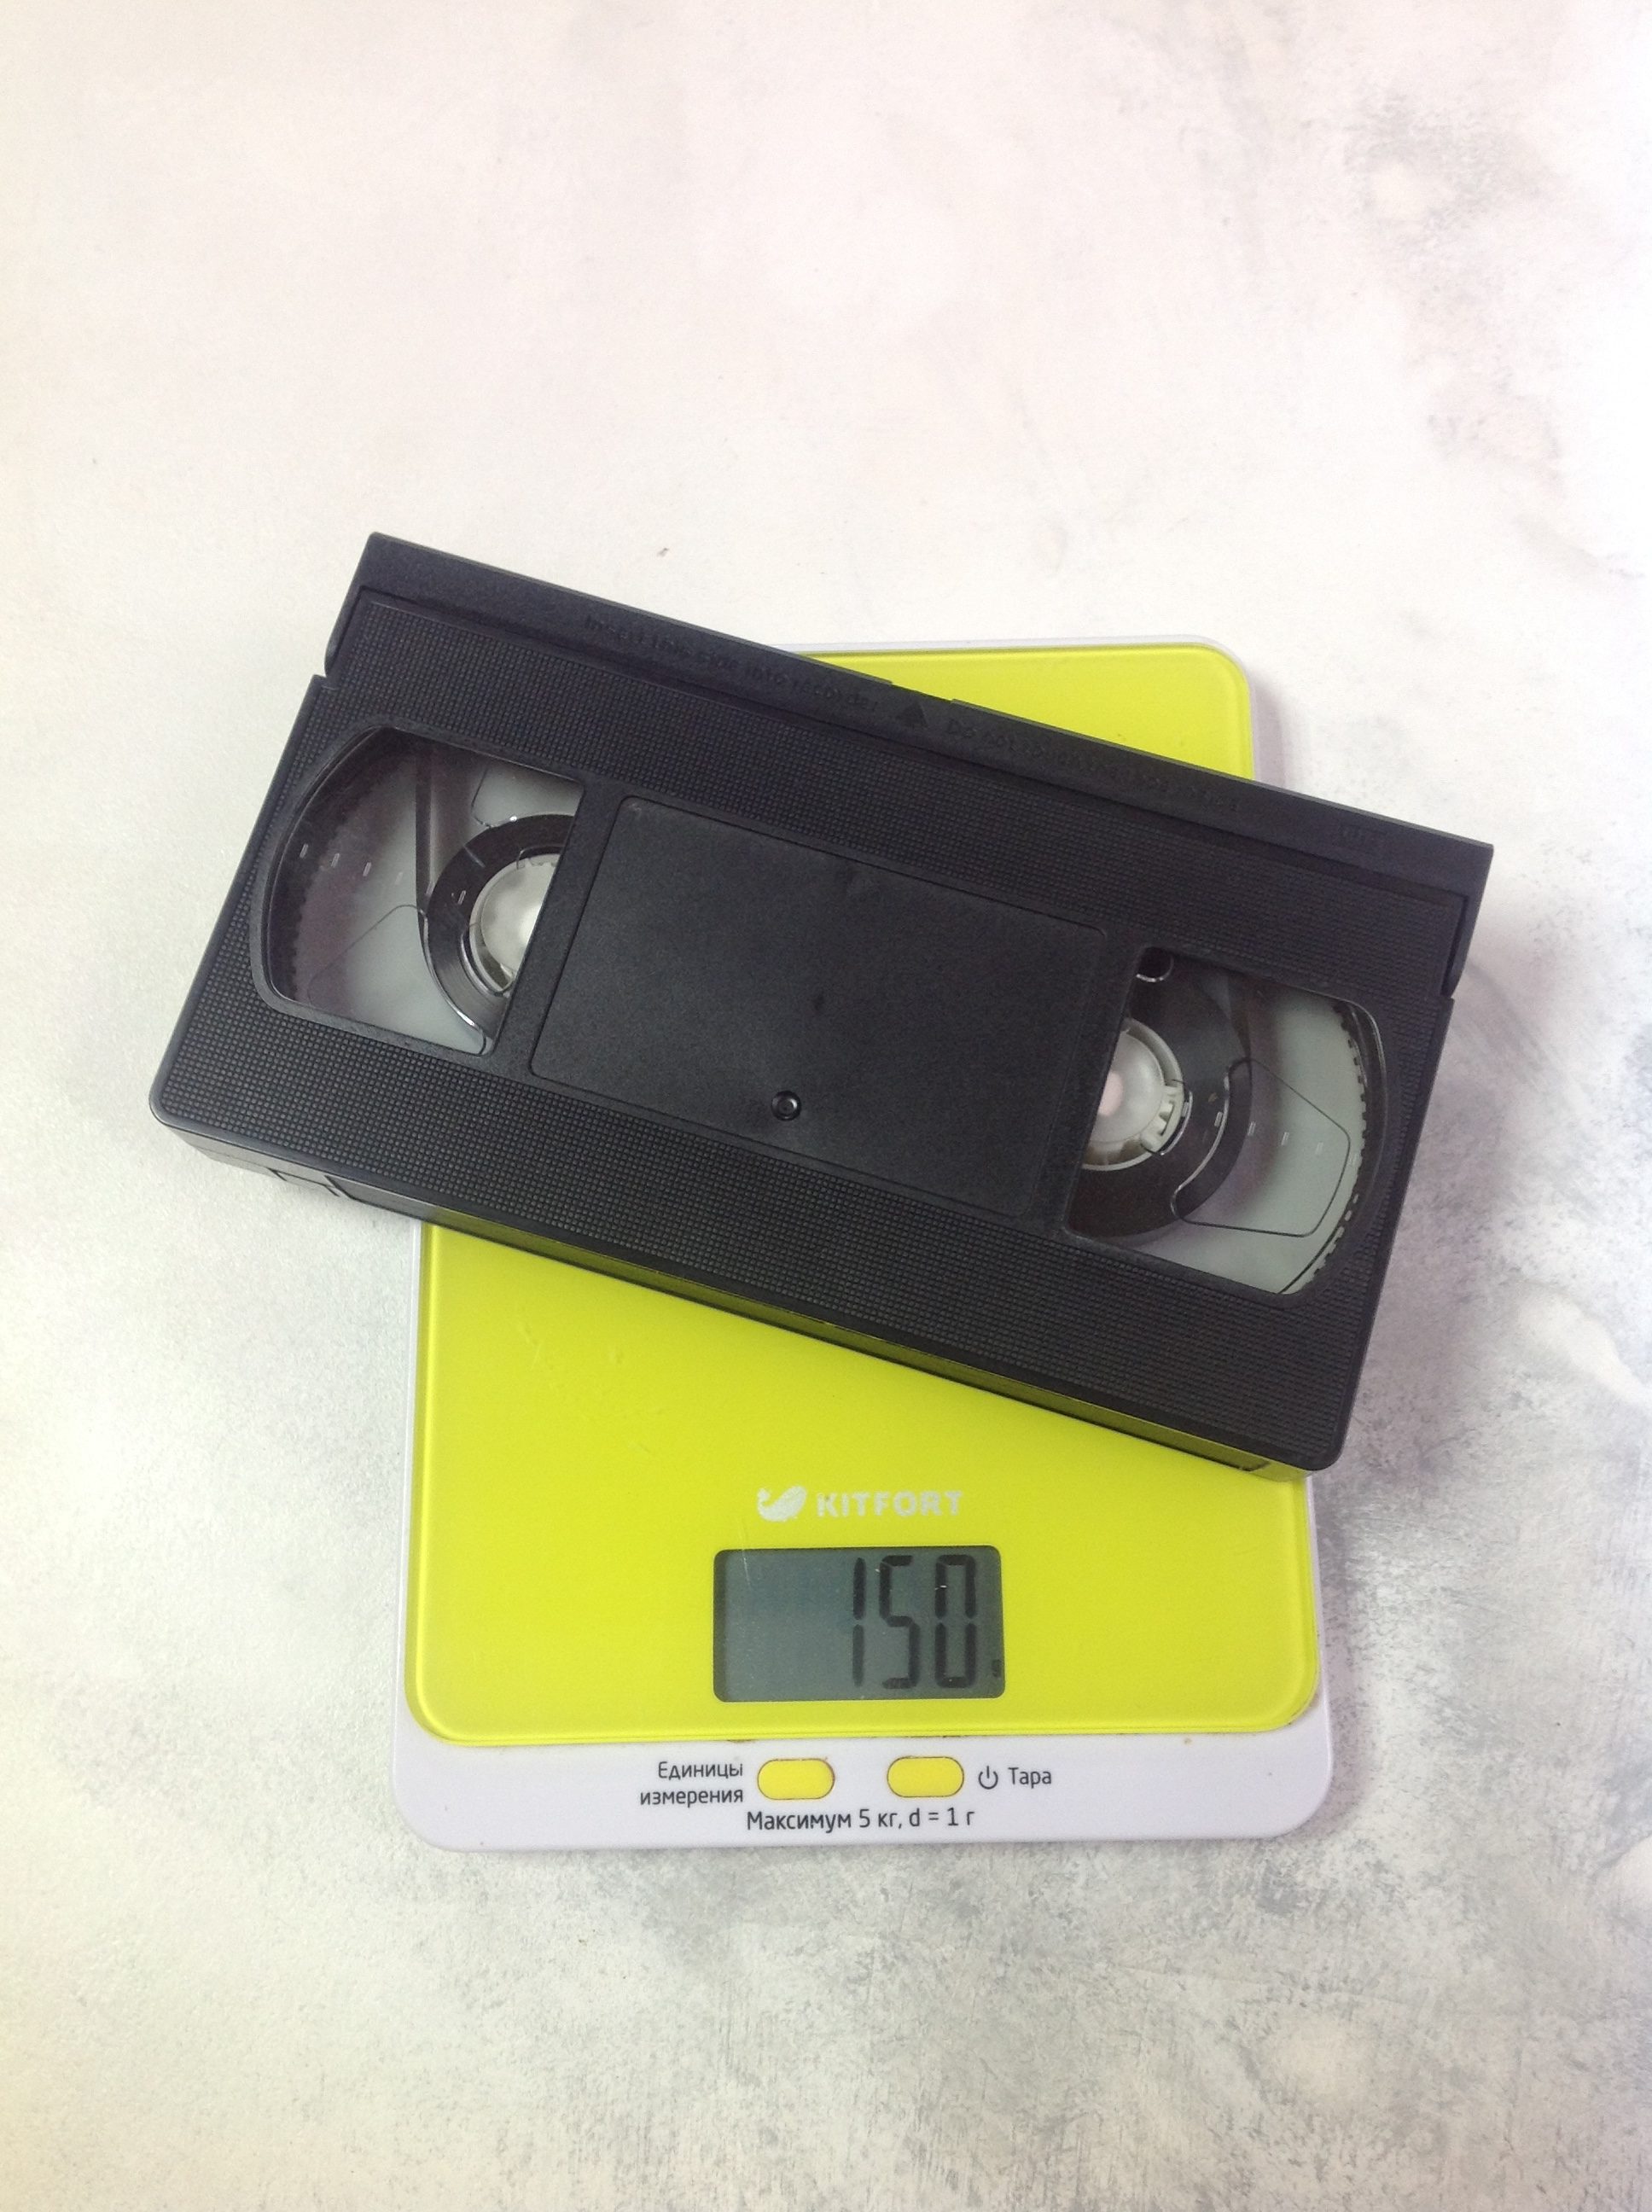 Cik sver video kasete?